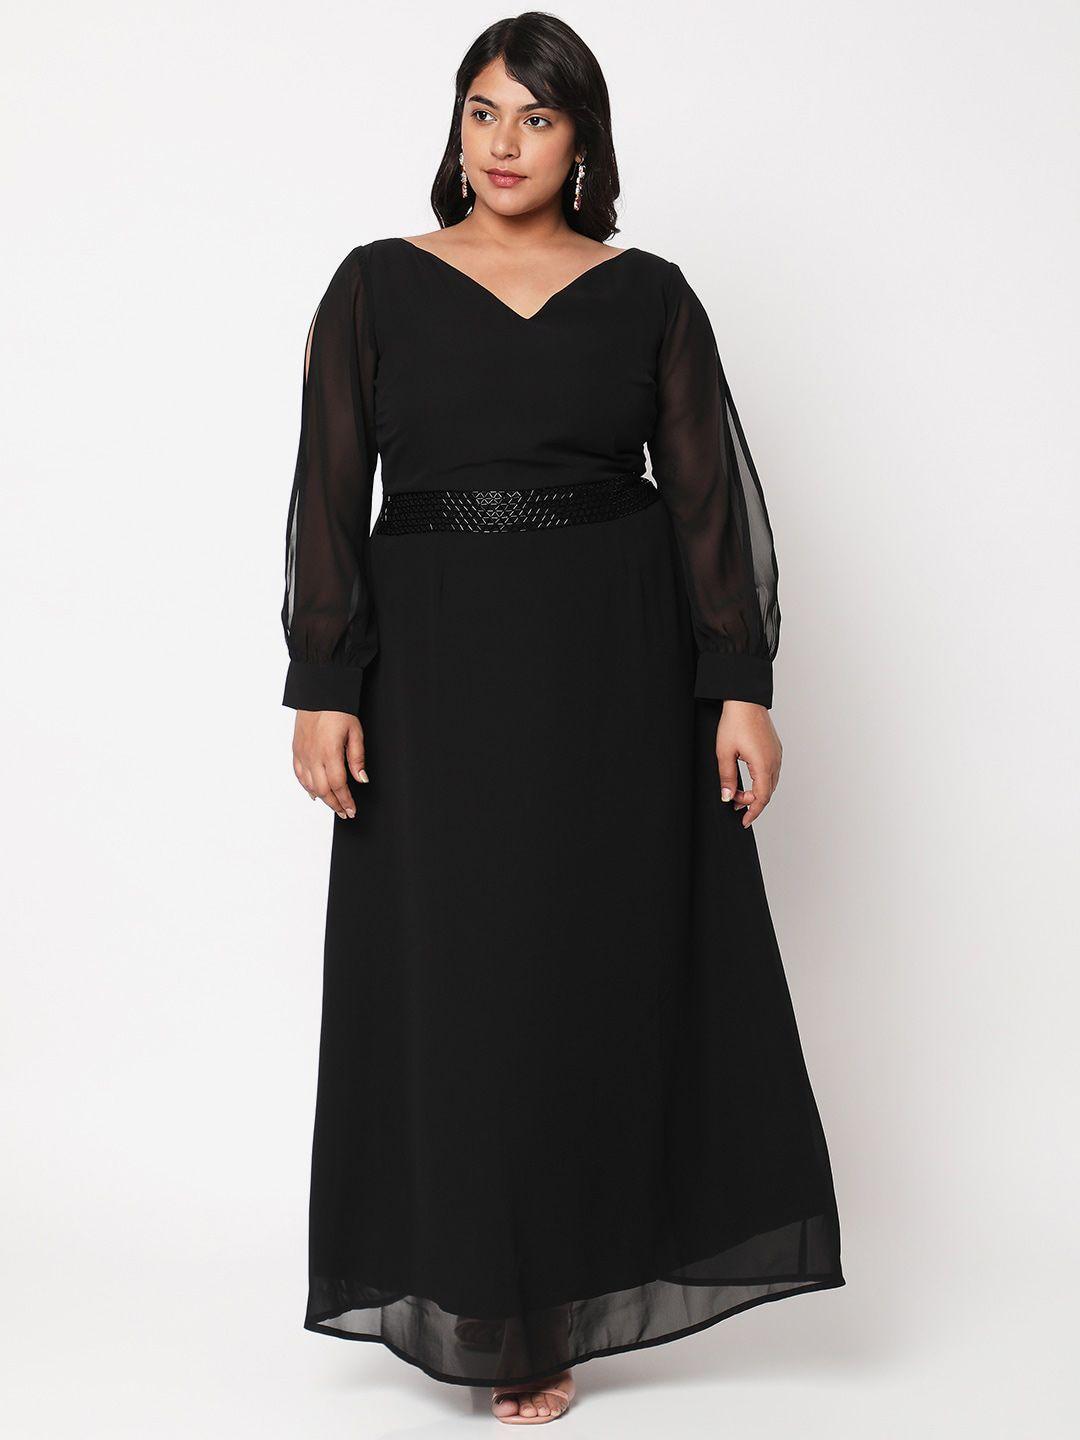 curves by mish black plus size georgette maxi dress